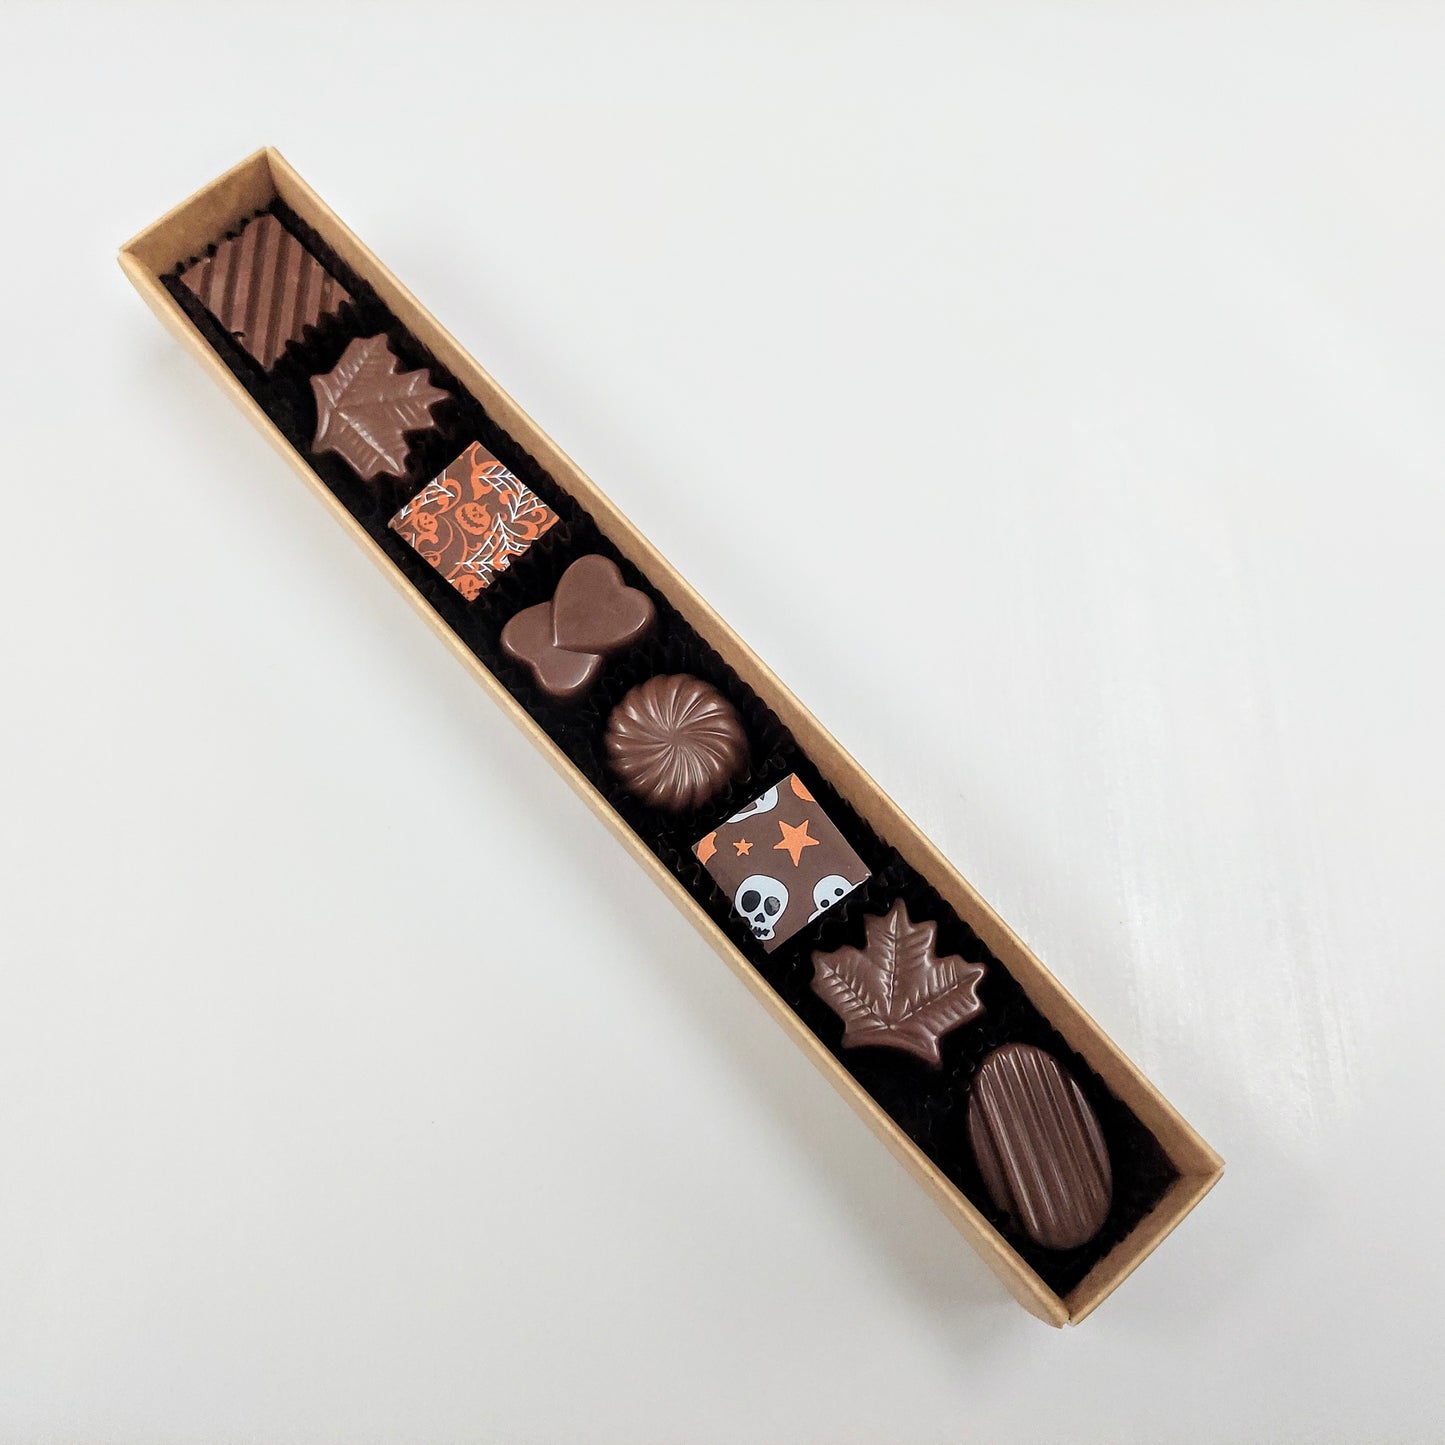 Box of 4 chocolates